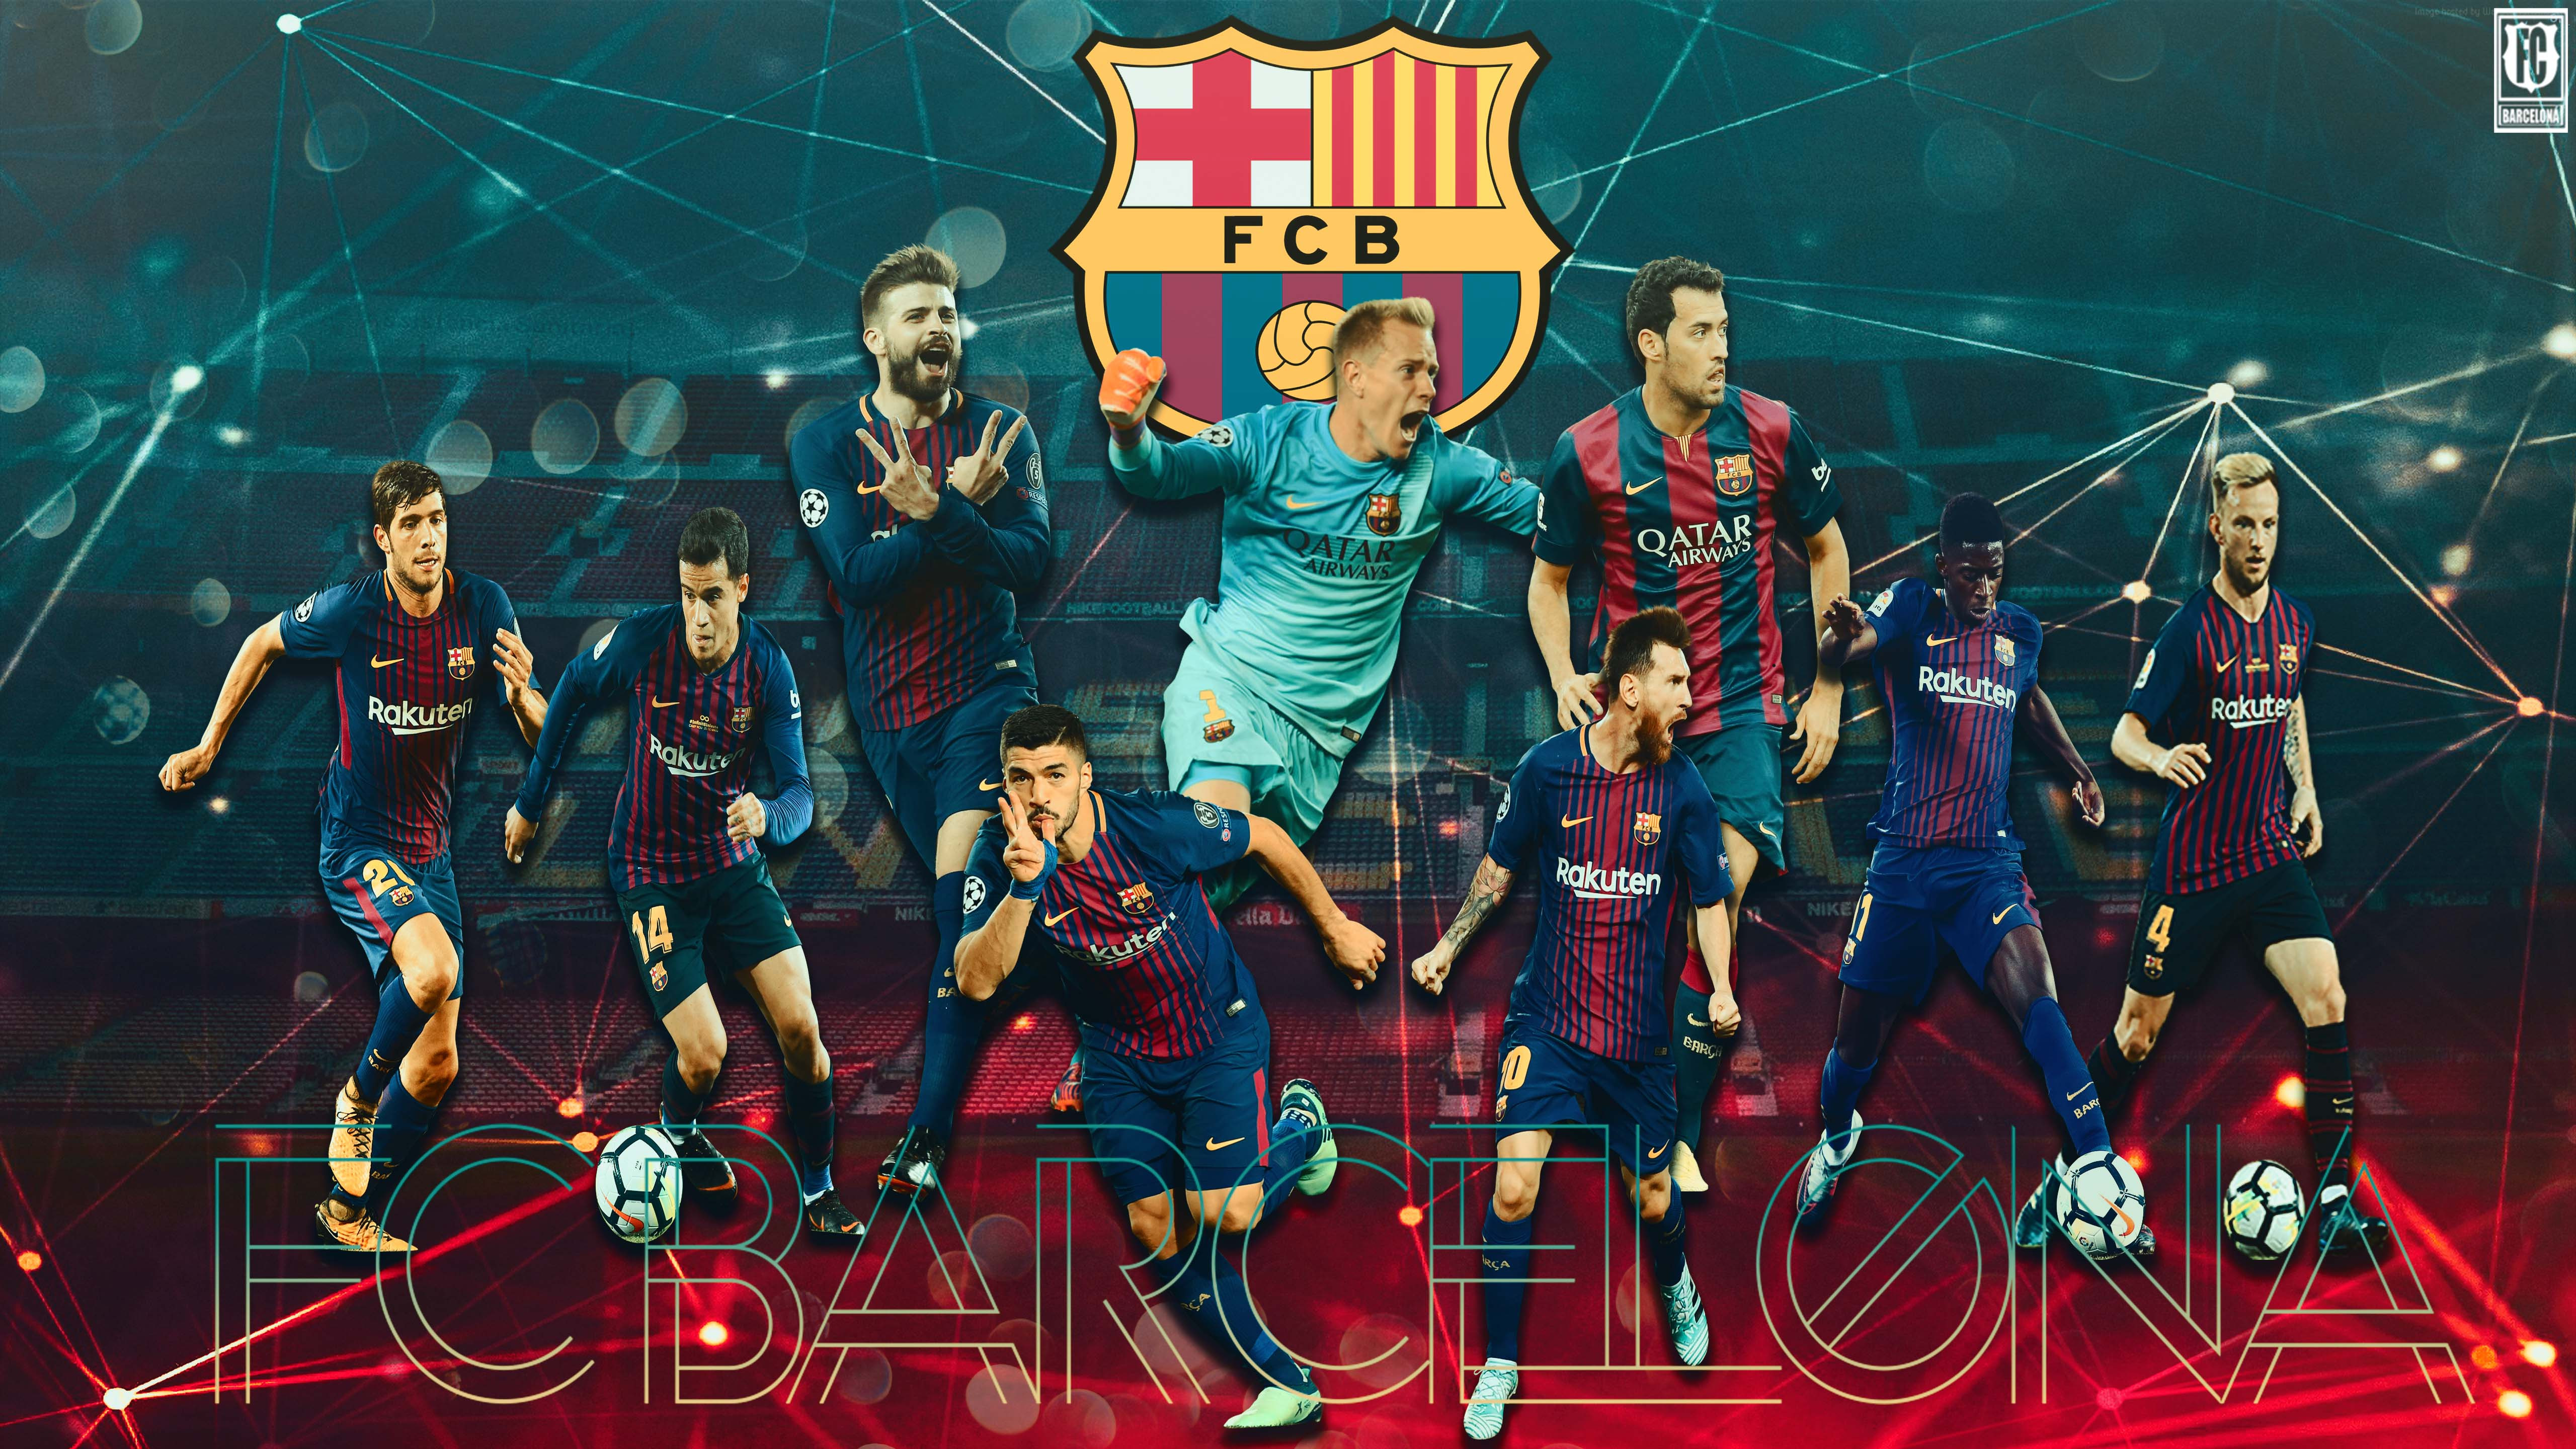 Download wallpaper: FC Barcelona 5120x2880